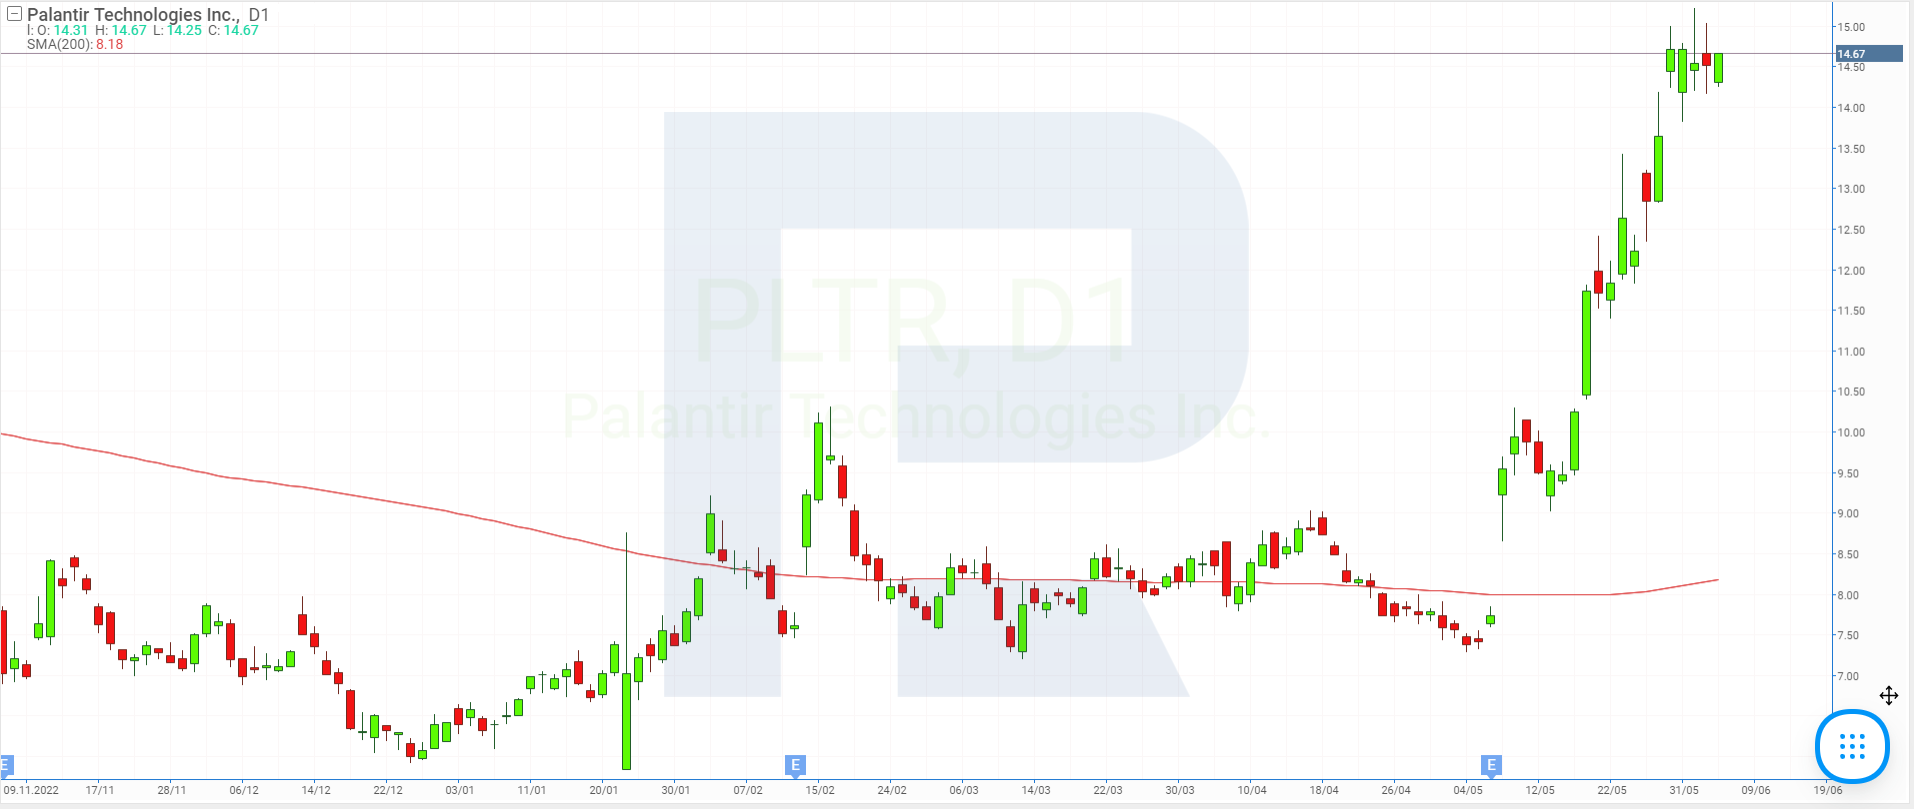 Stock price chart of Palantir Technologies Inc.